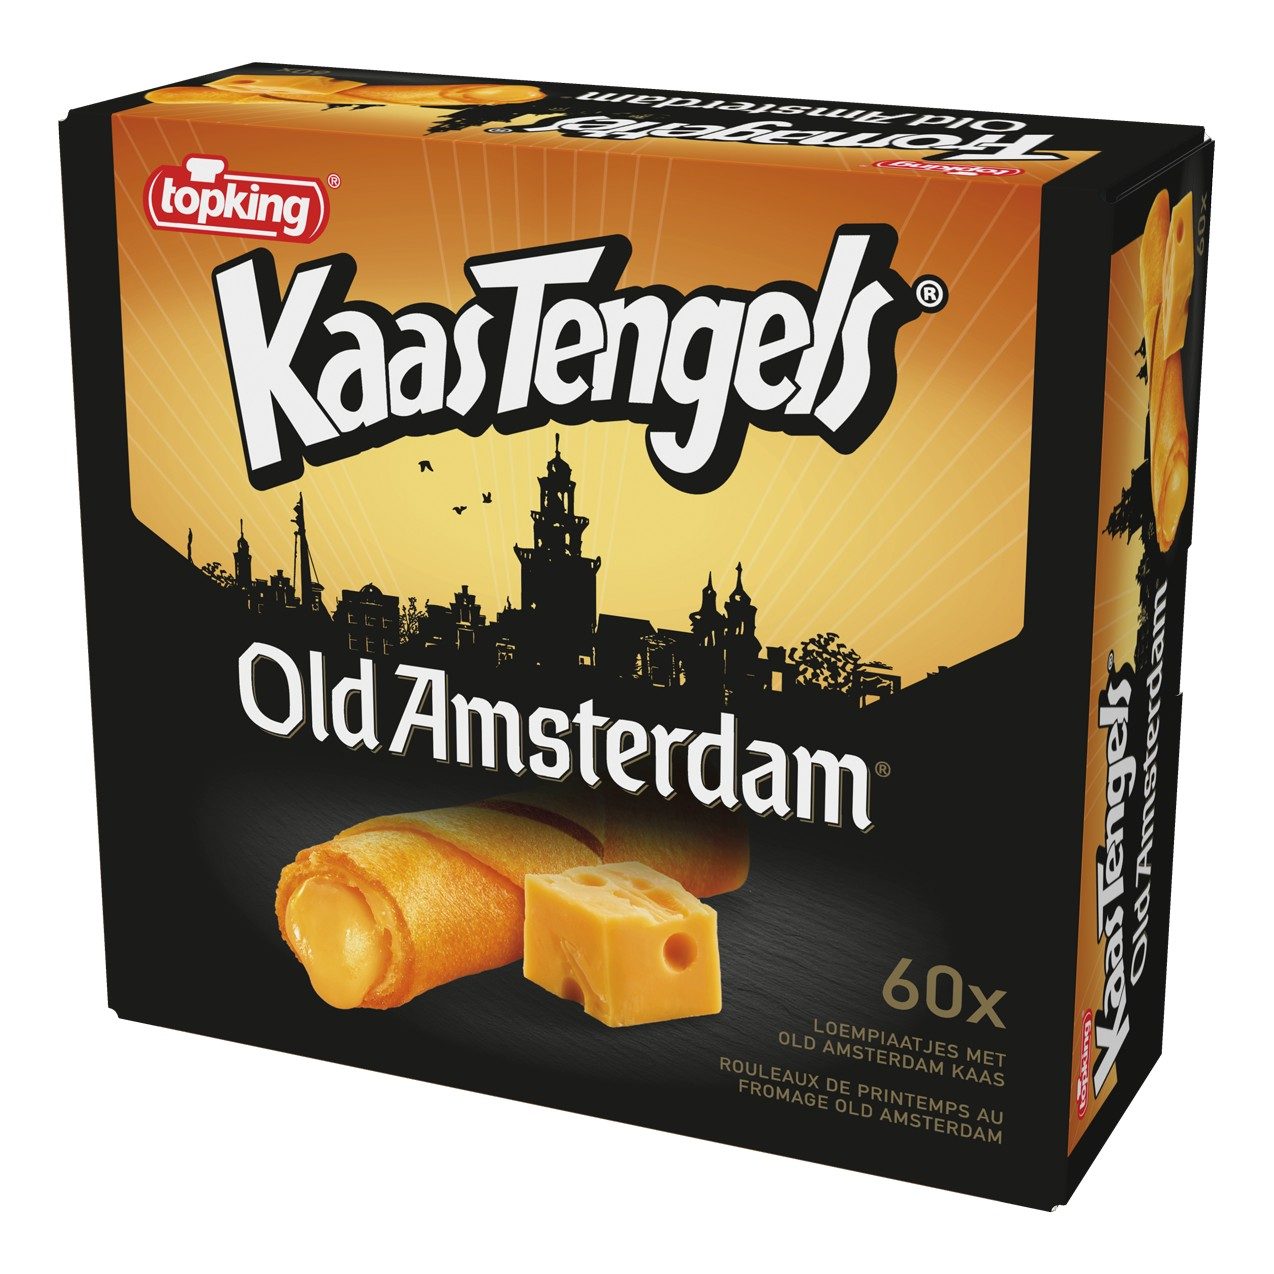 Kaastengels old Amsterdam